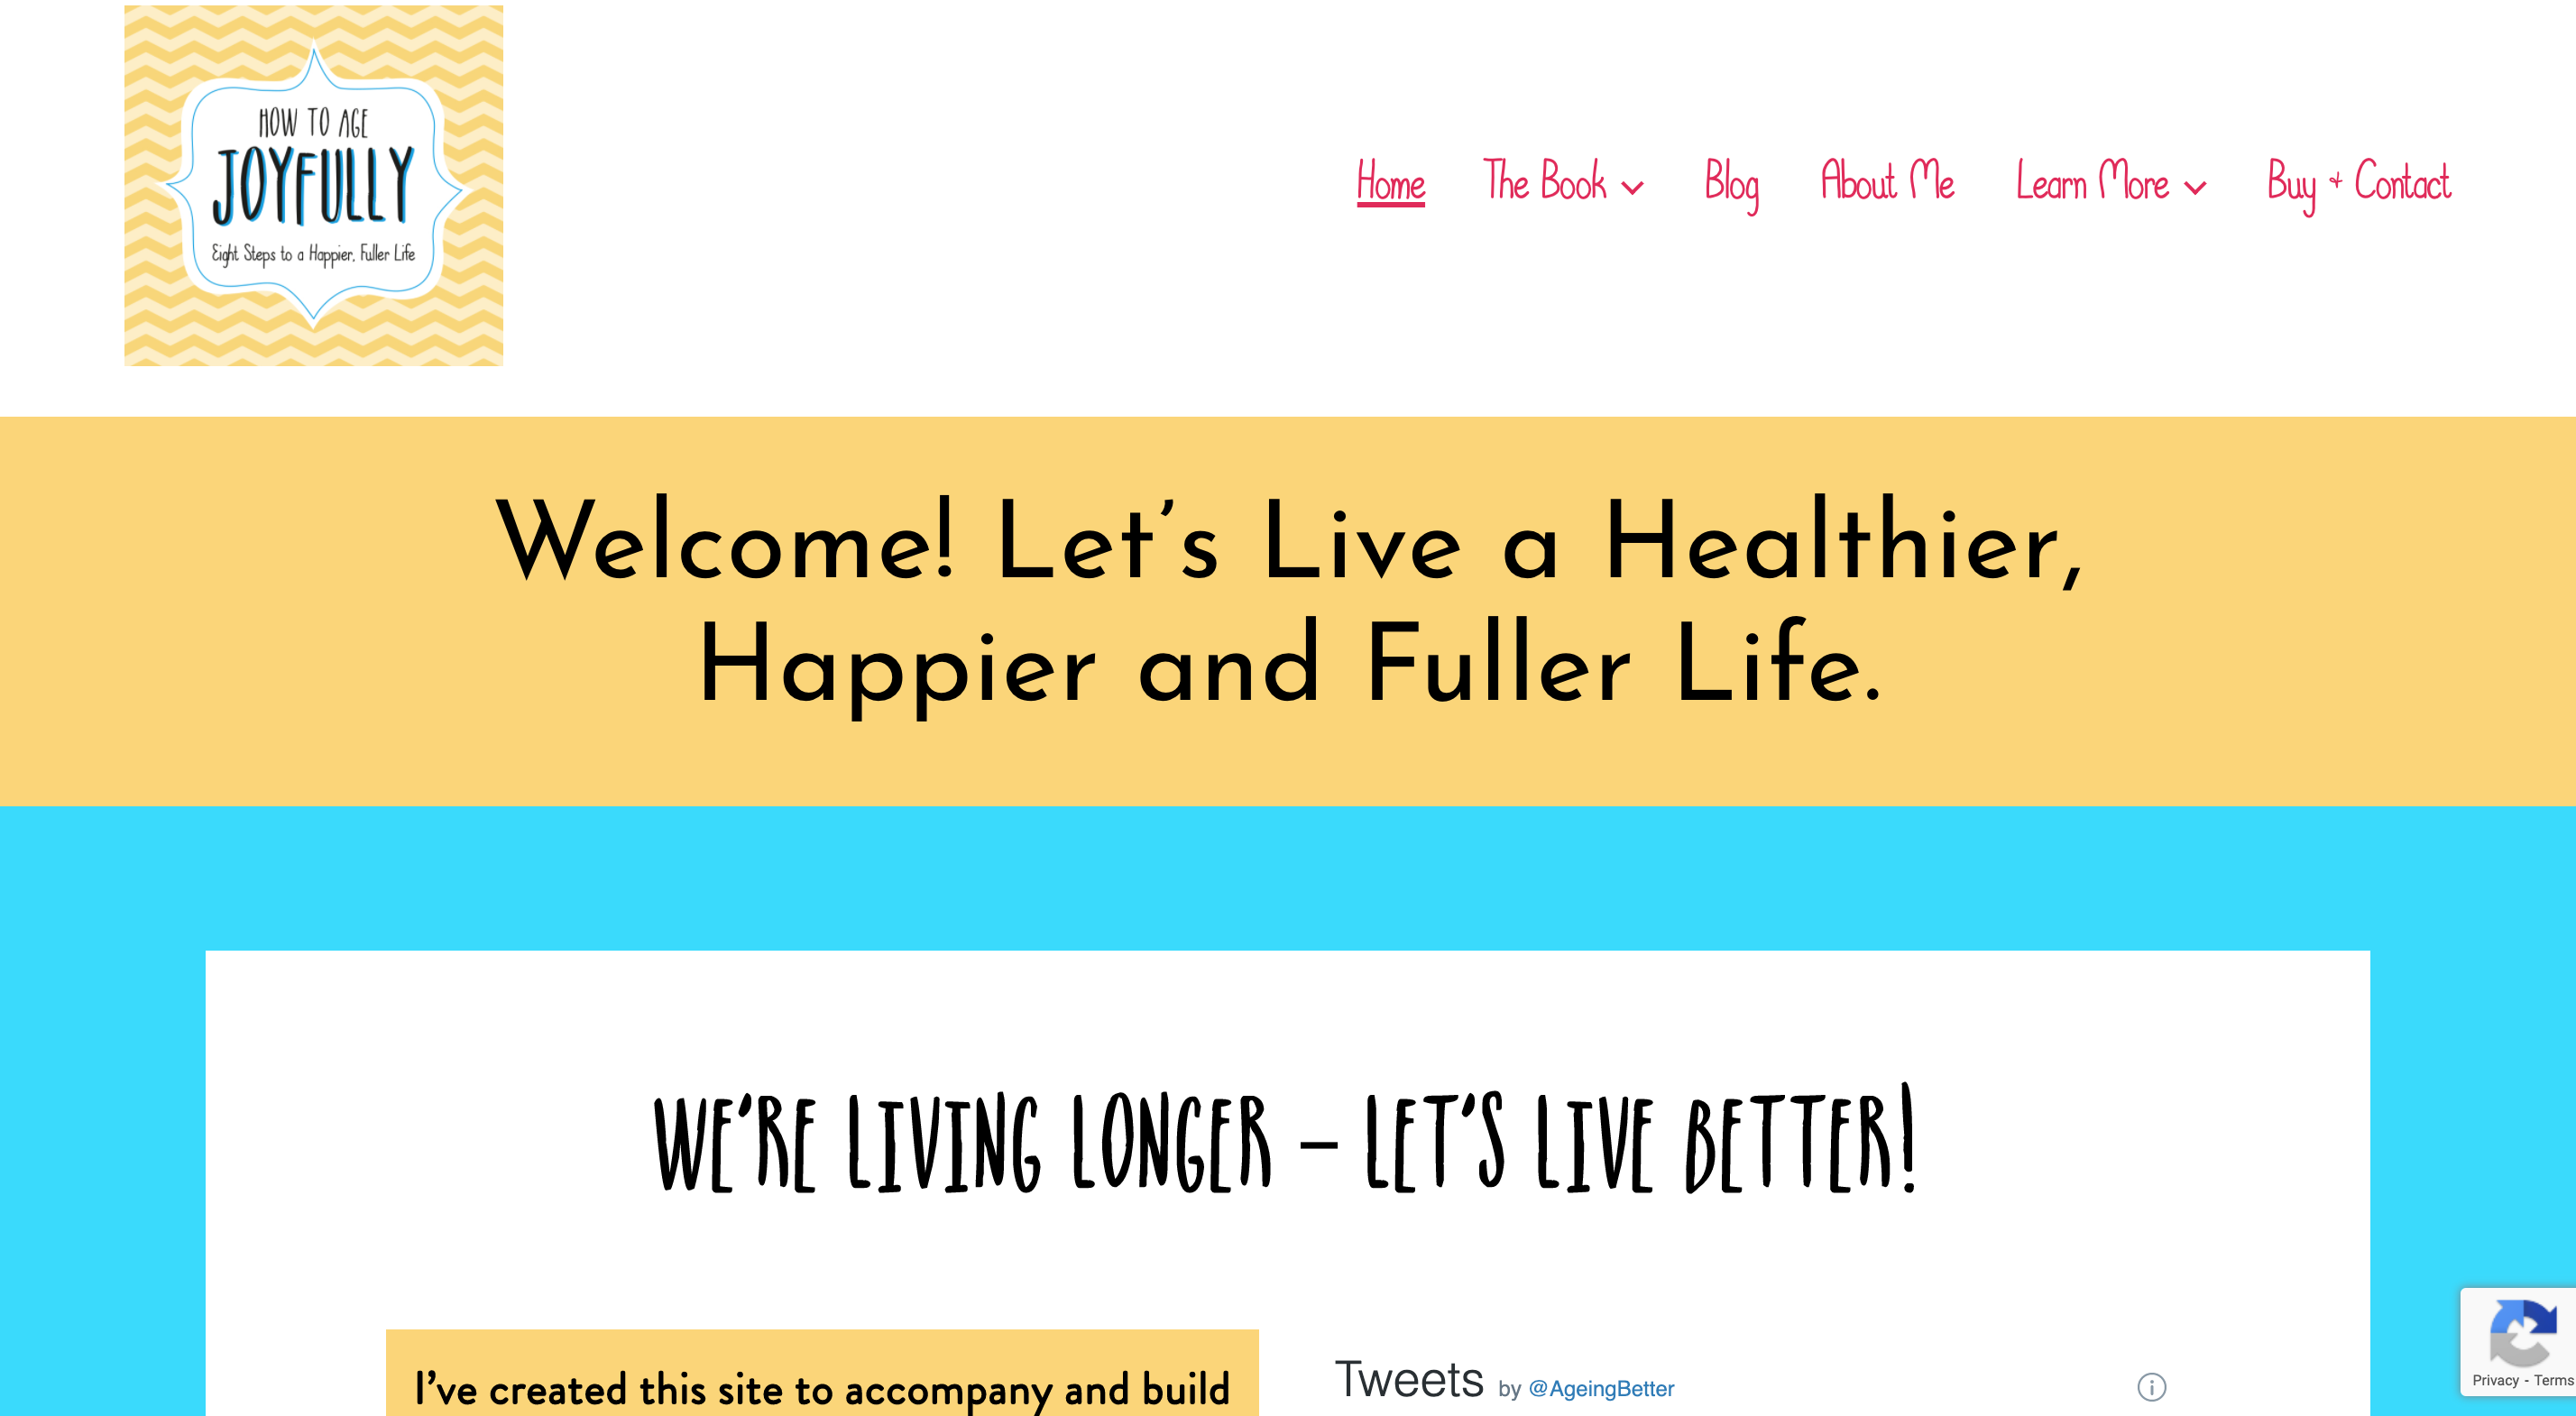 How to Age Joyfully responsive website